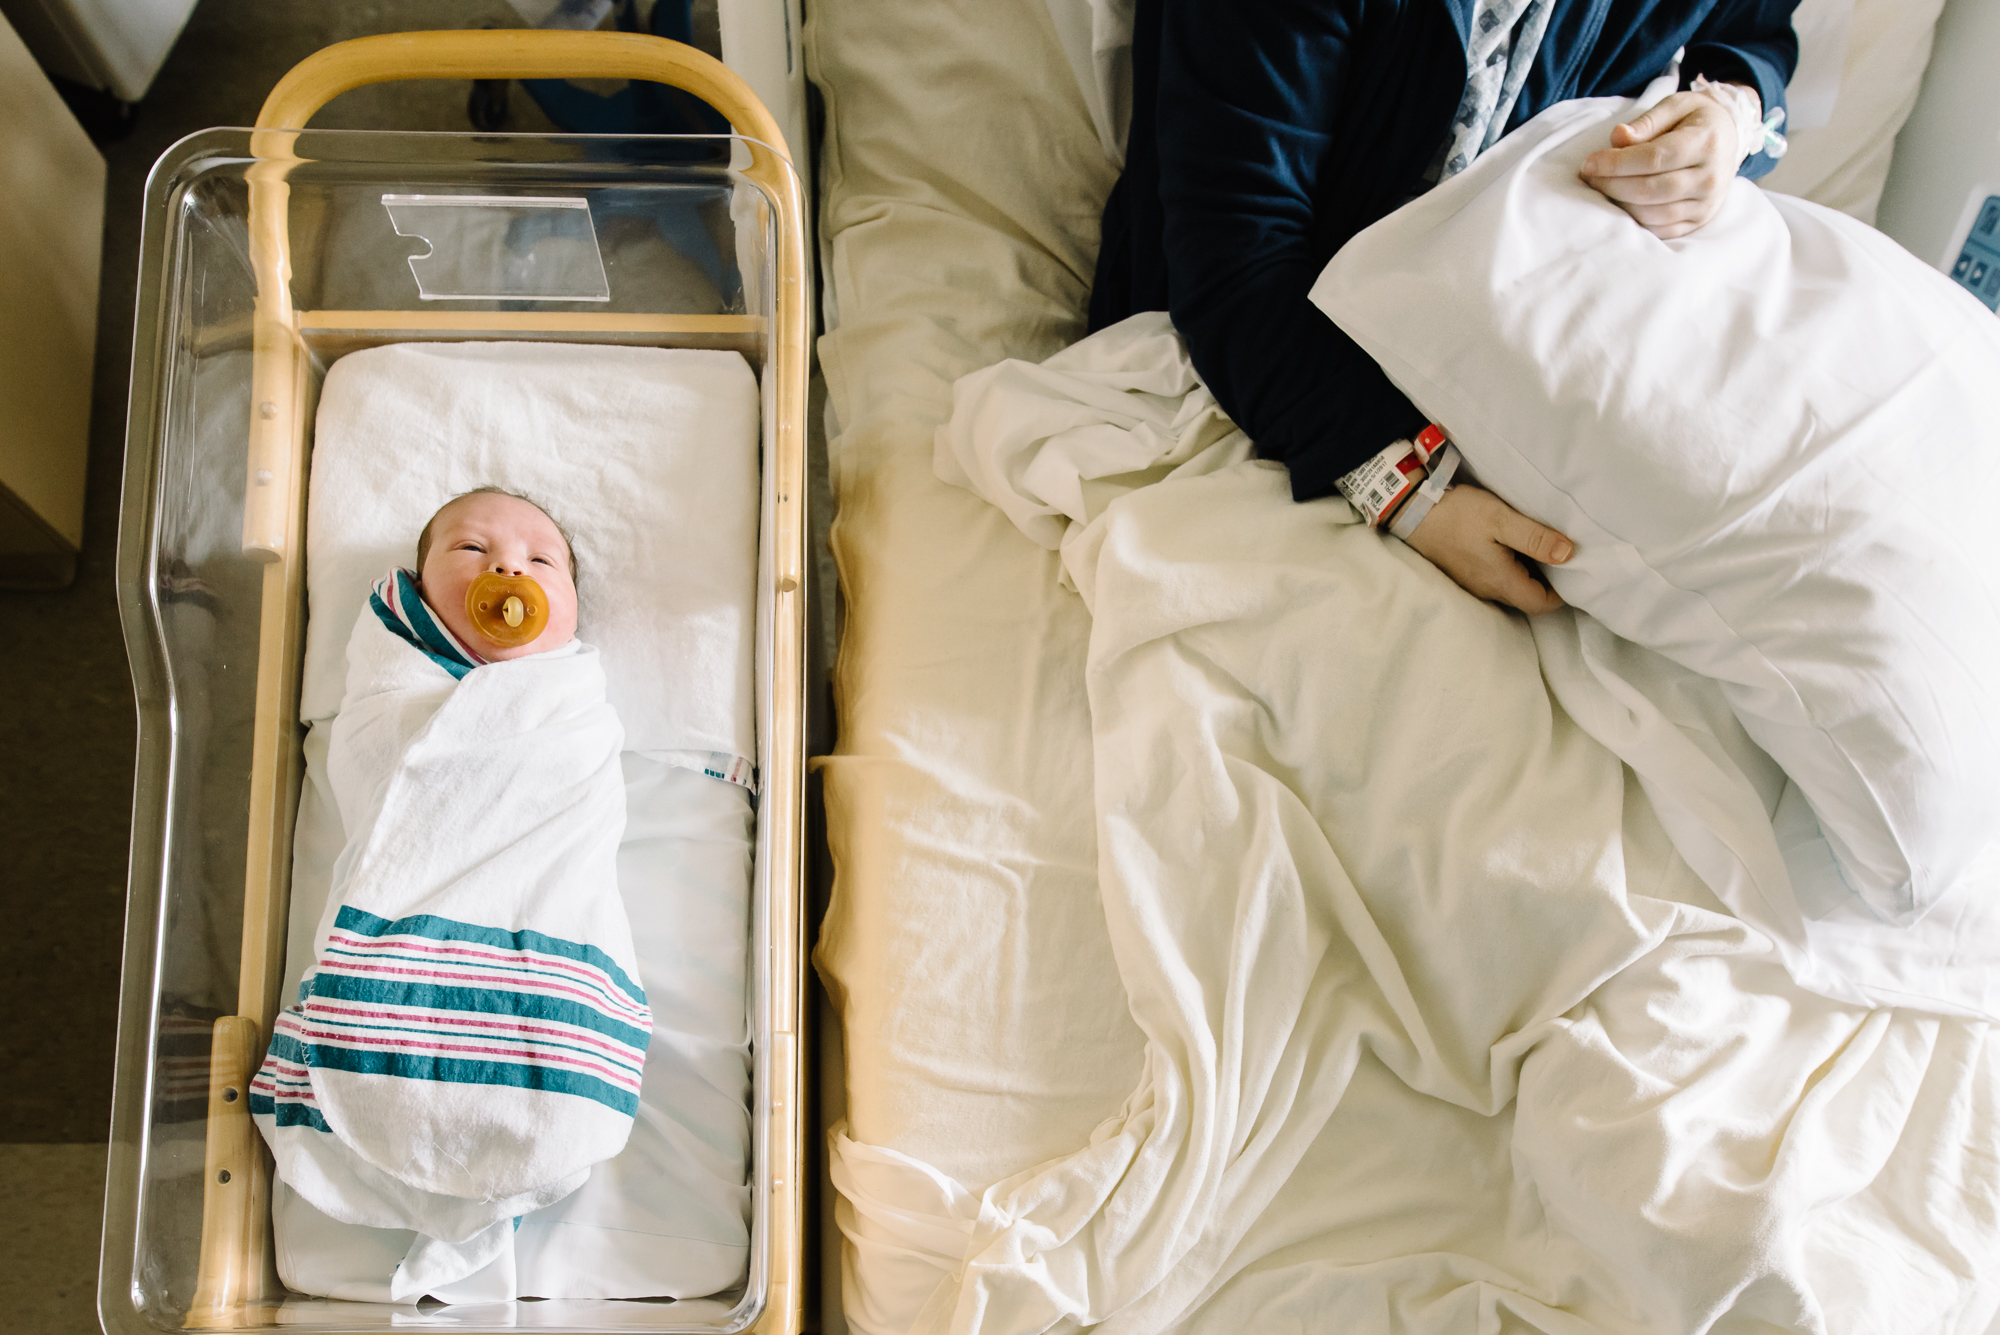 Erika Roa - Baby in hospital bassinet